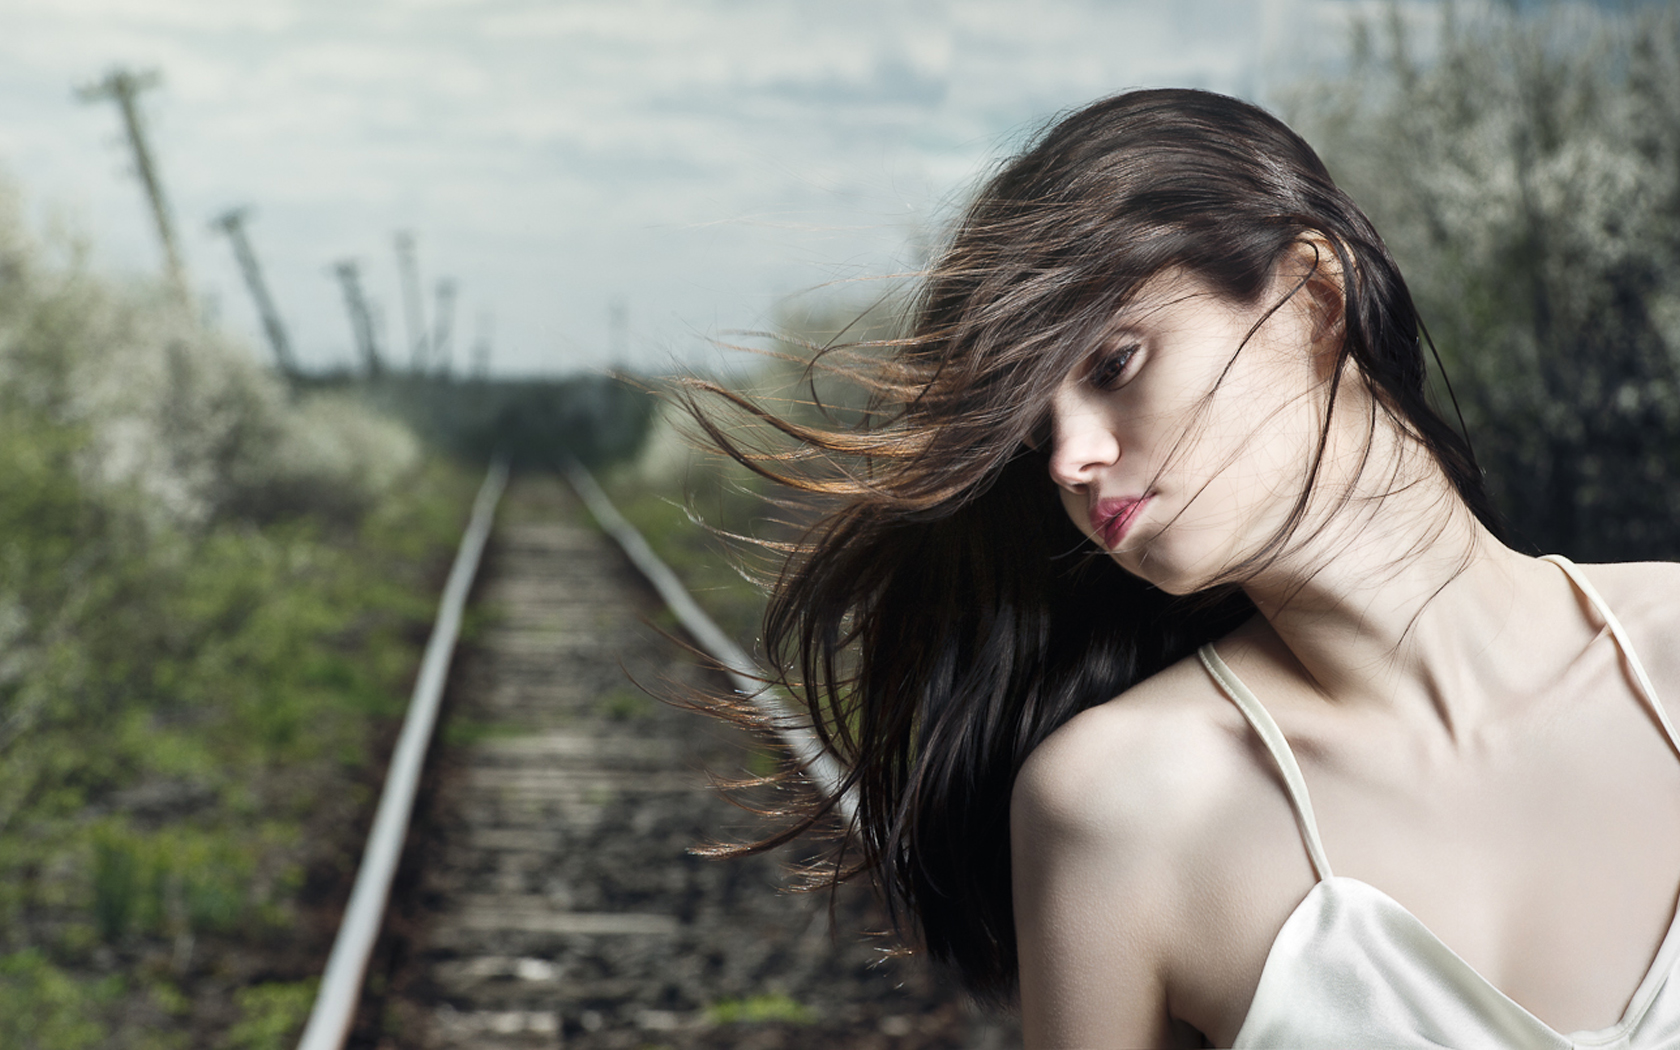 Девушка на железной дороге